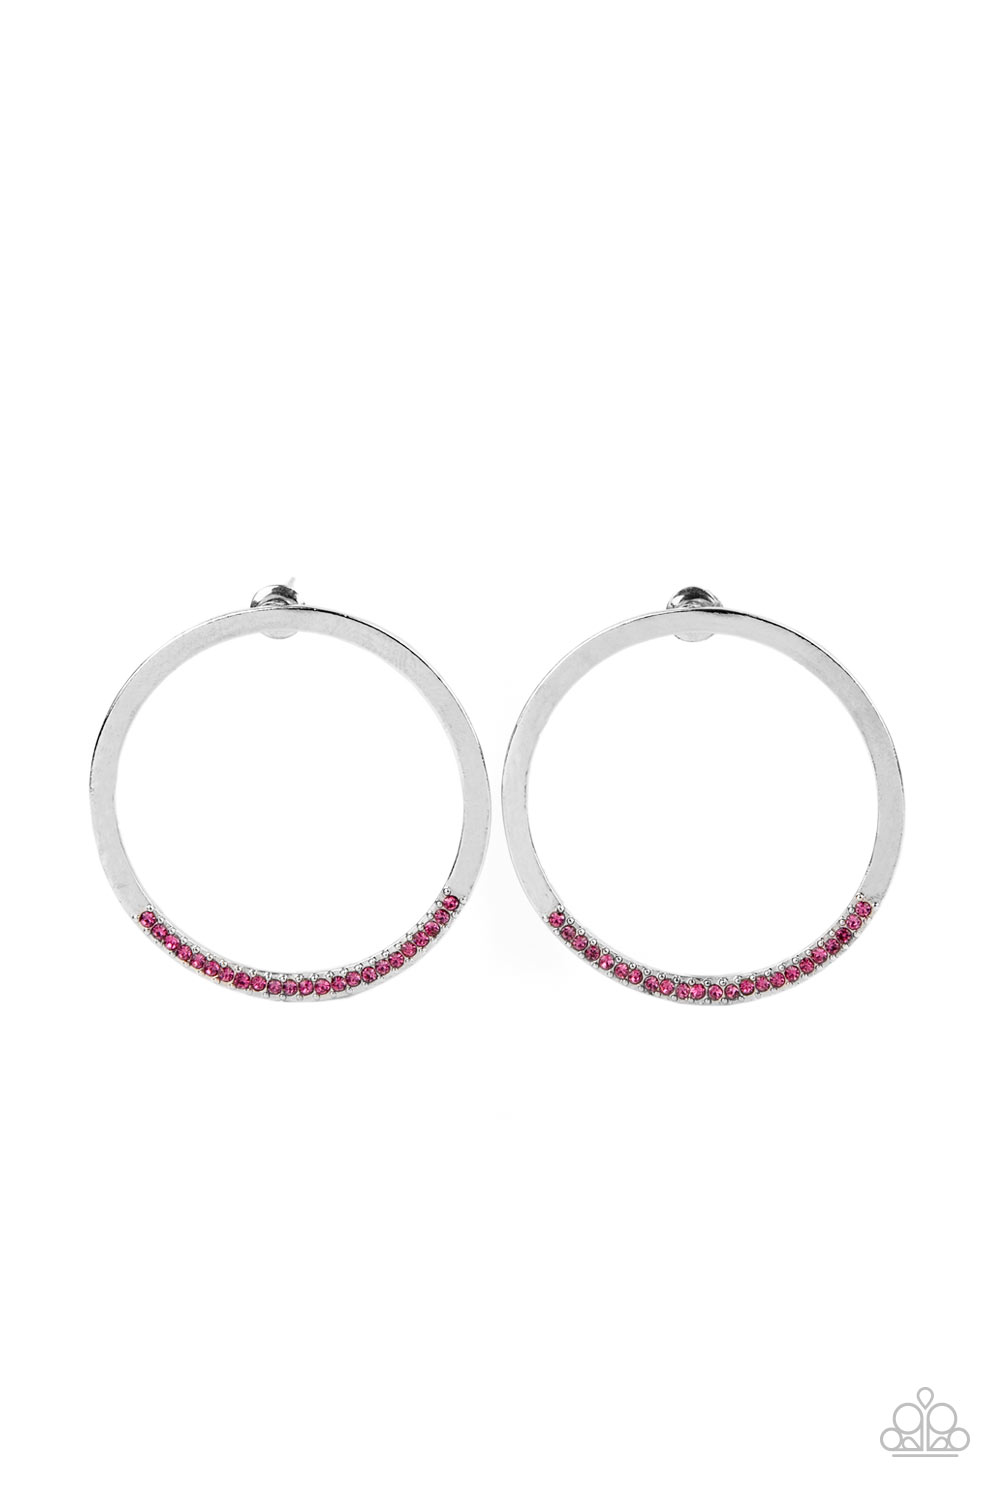 Spot On Opulence - Pink Earrings - Princess Glam Shop